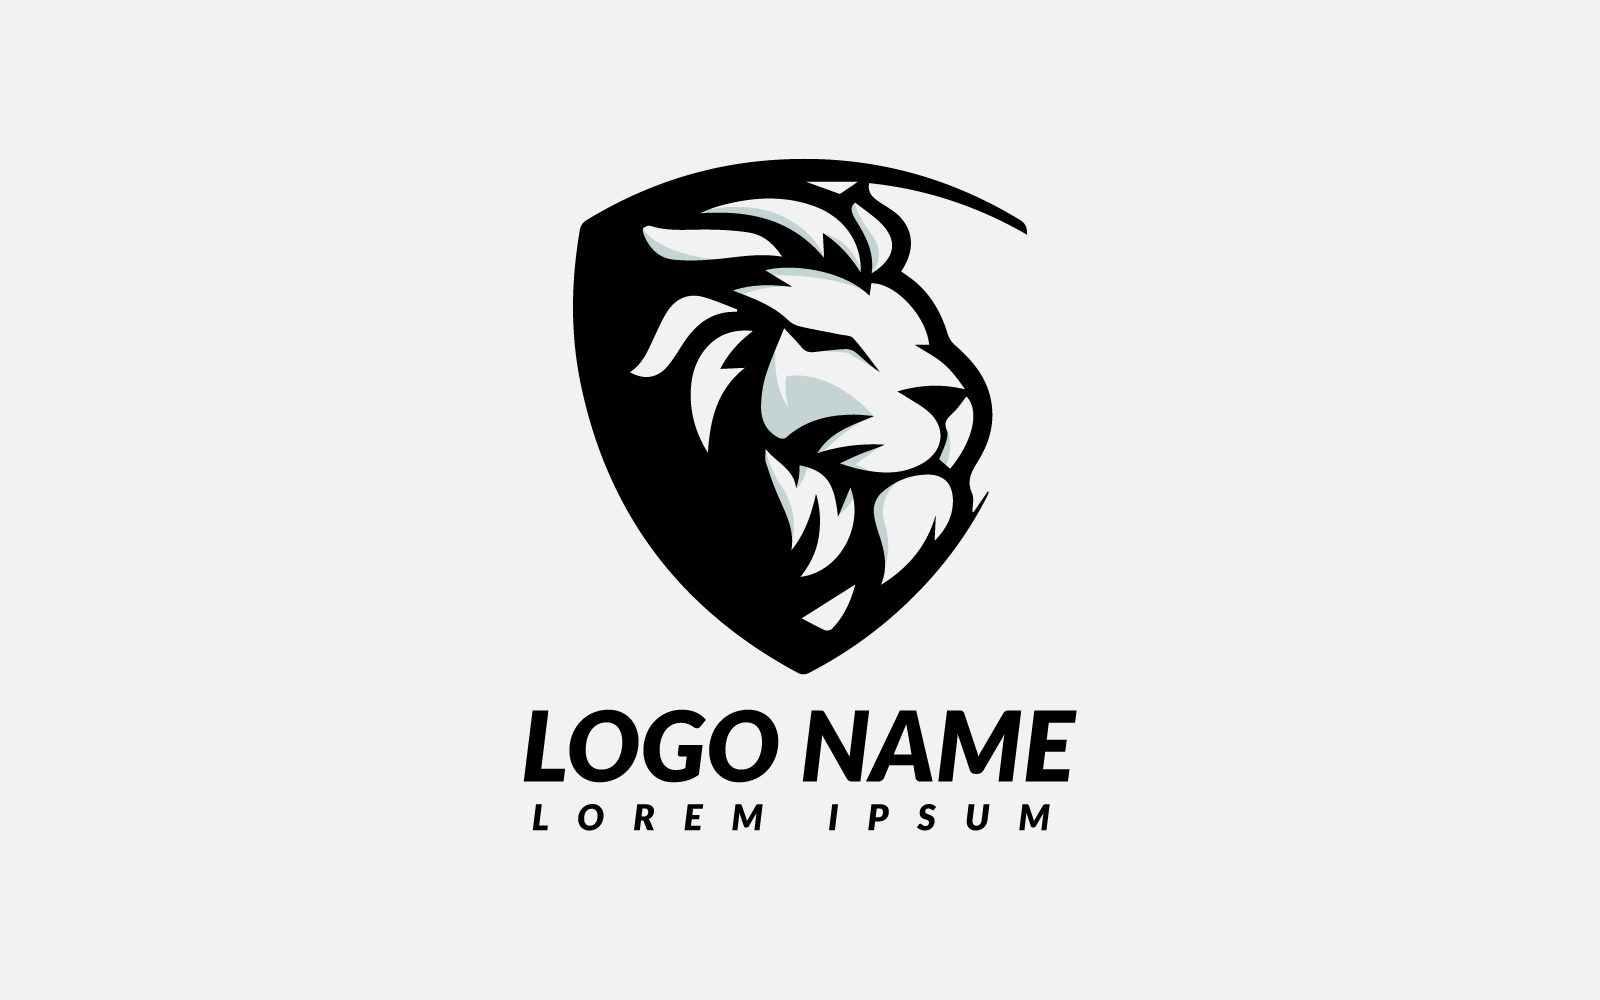 Unique And Creative Lion Logo #223701 - TemplateMonster